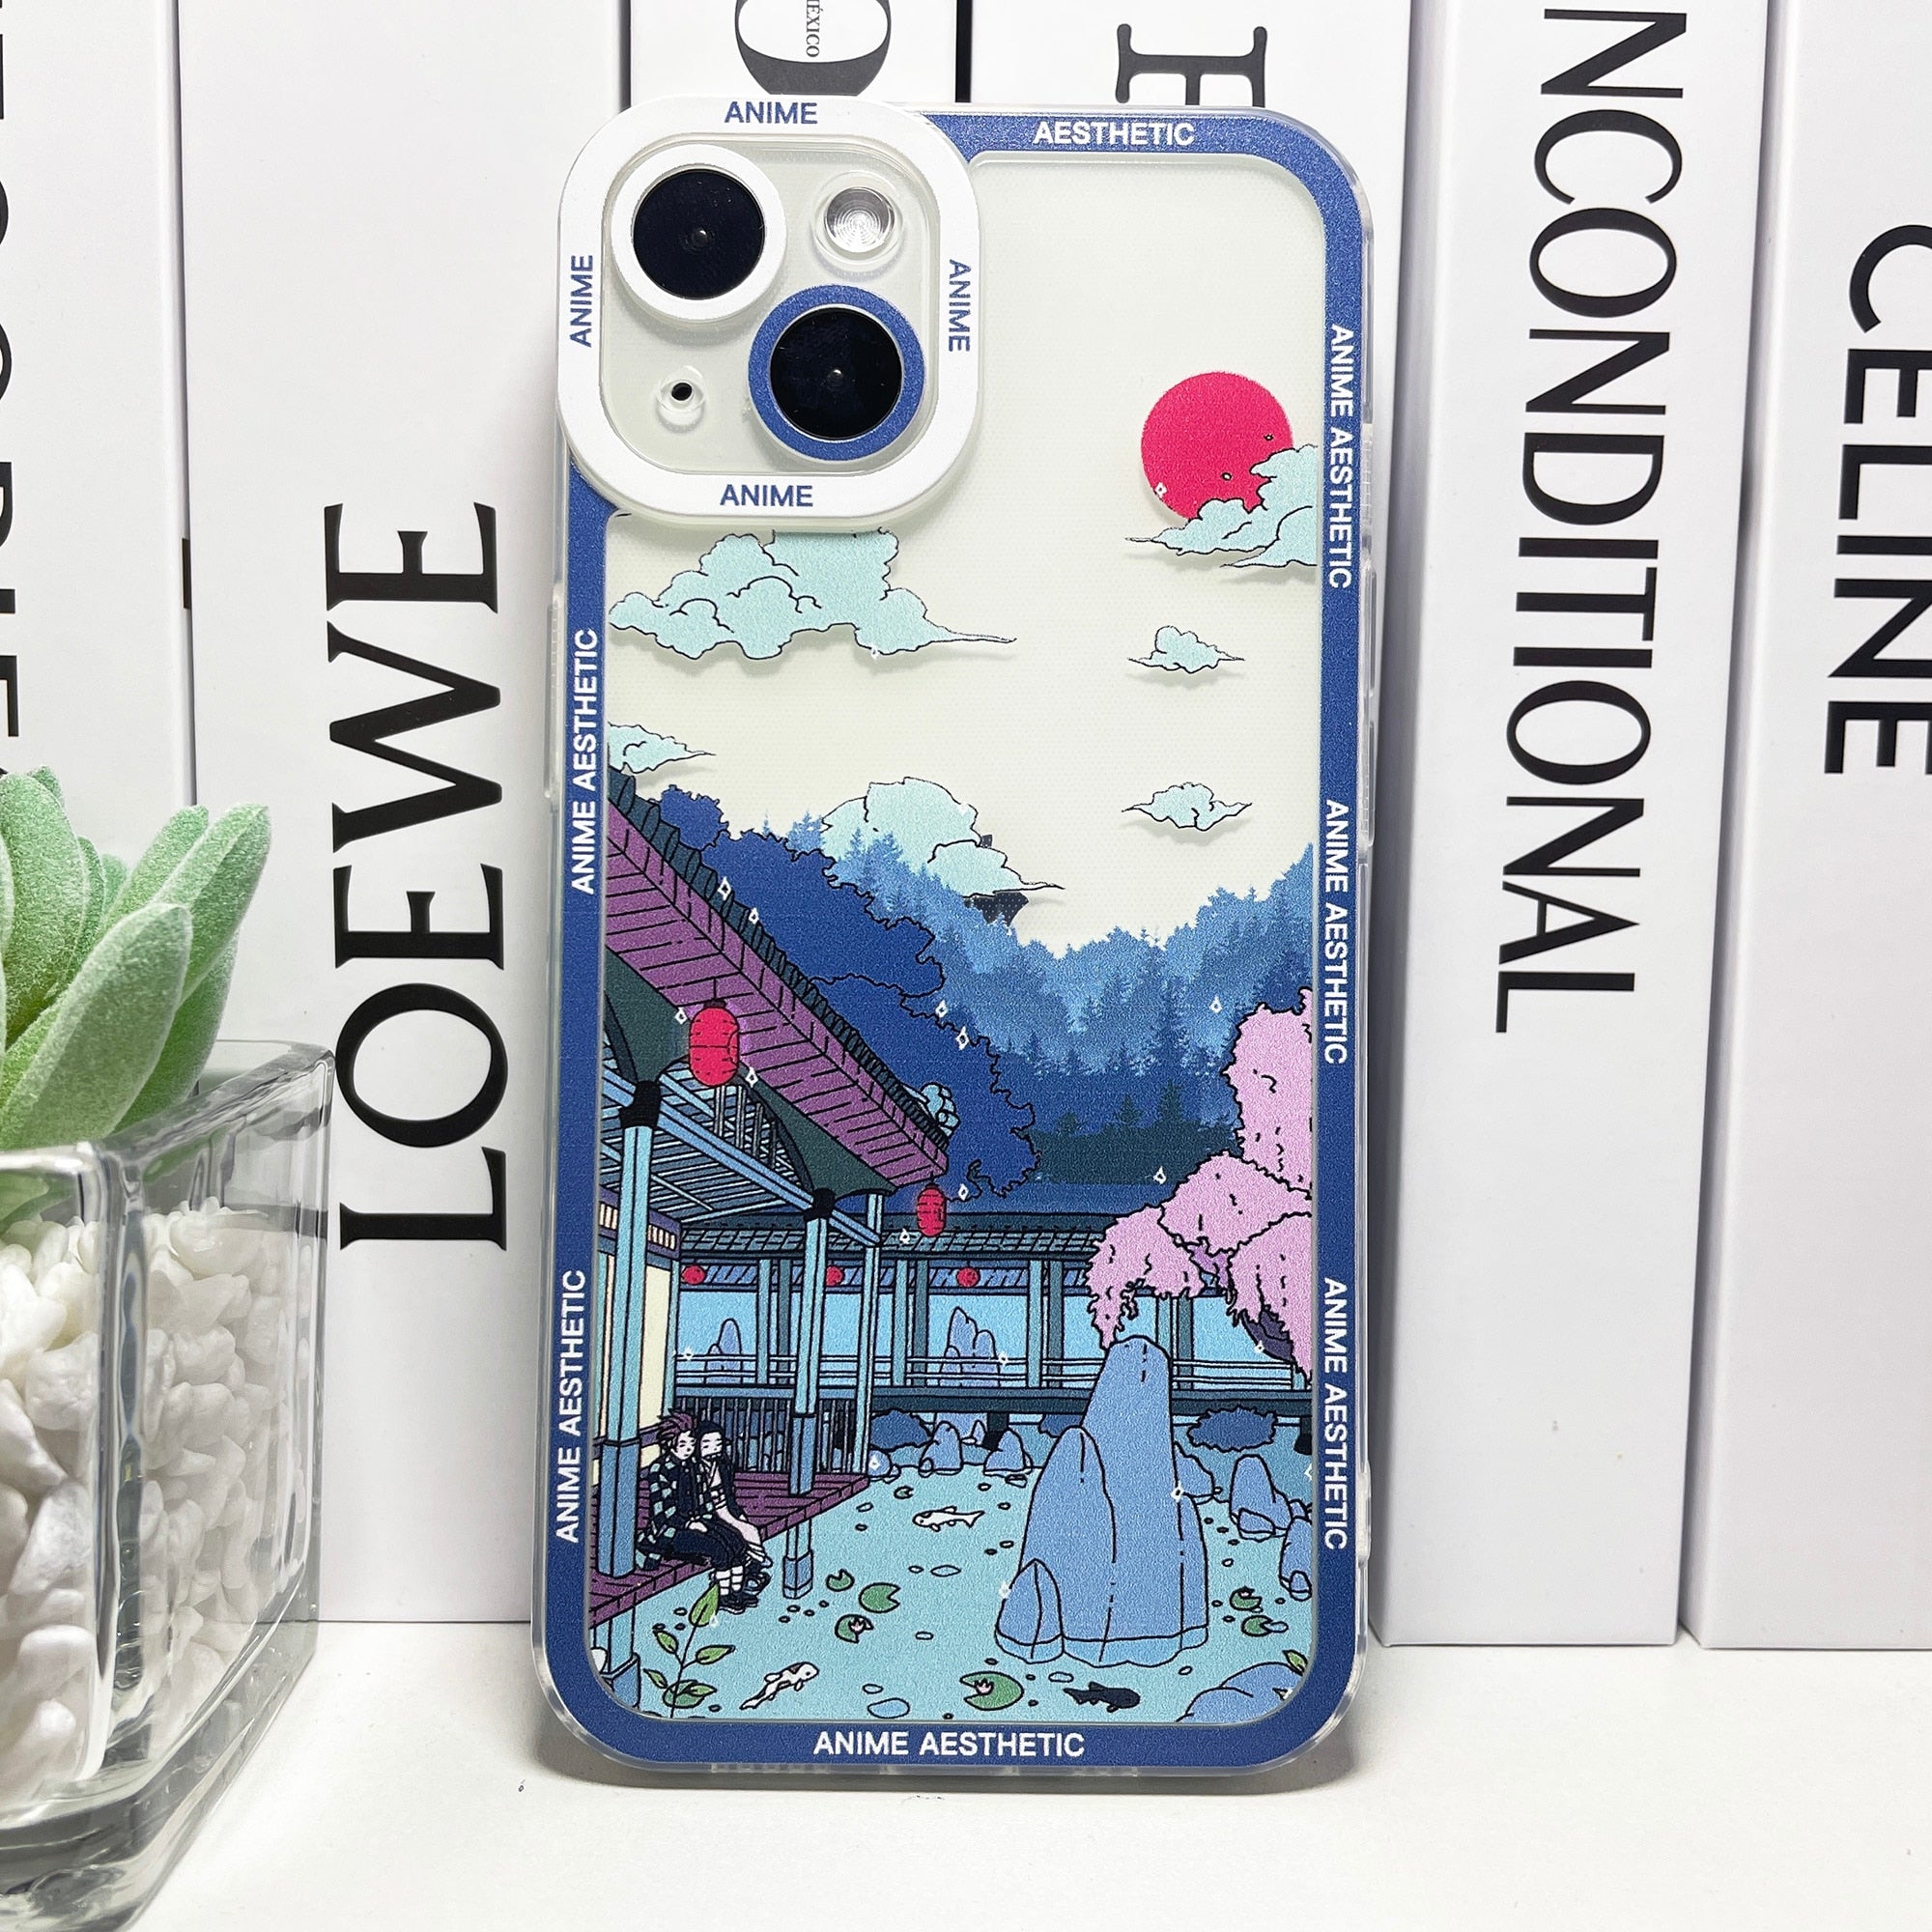 Anime Train Station and Girl Summer Aesthetic  Anime Aesthetic  Phone Case   TeePublic